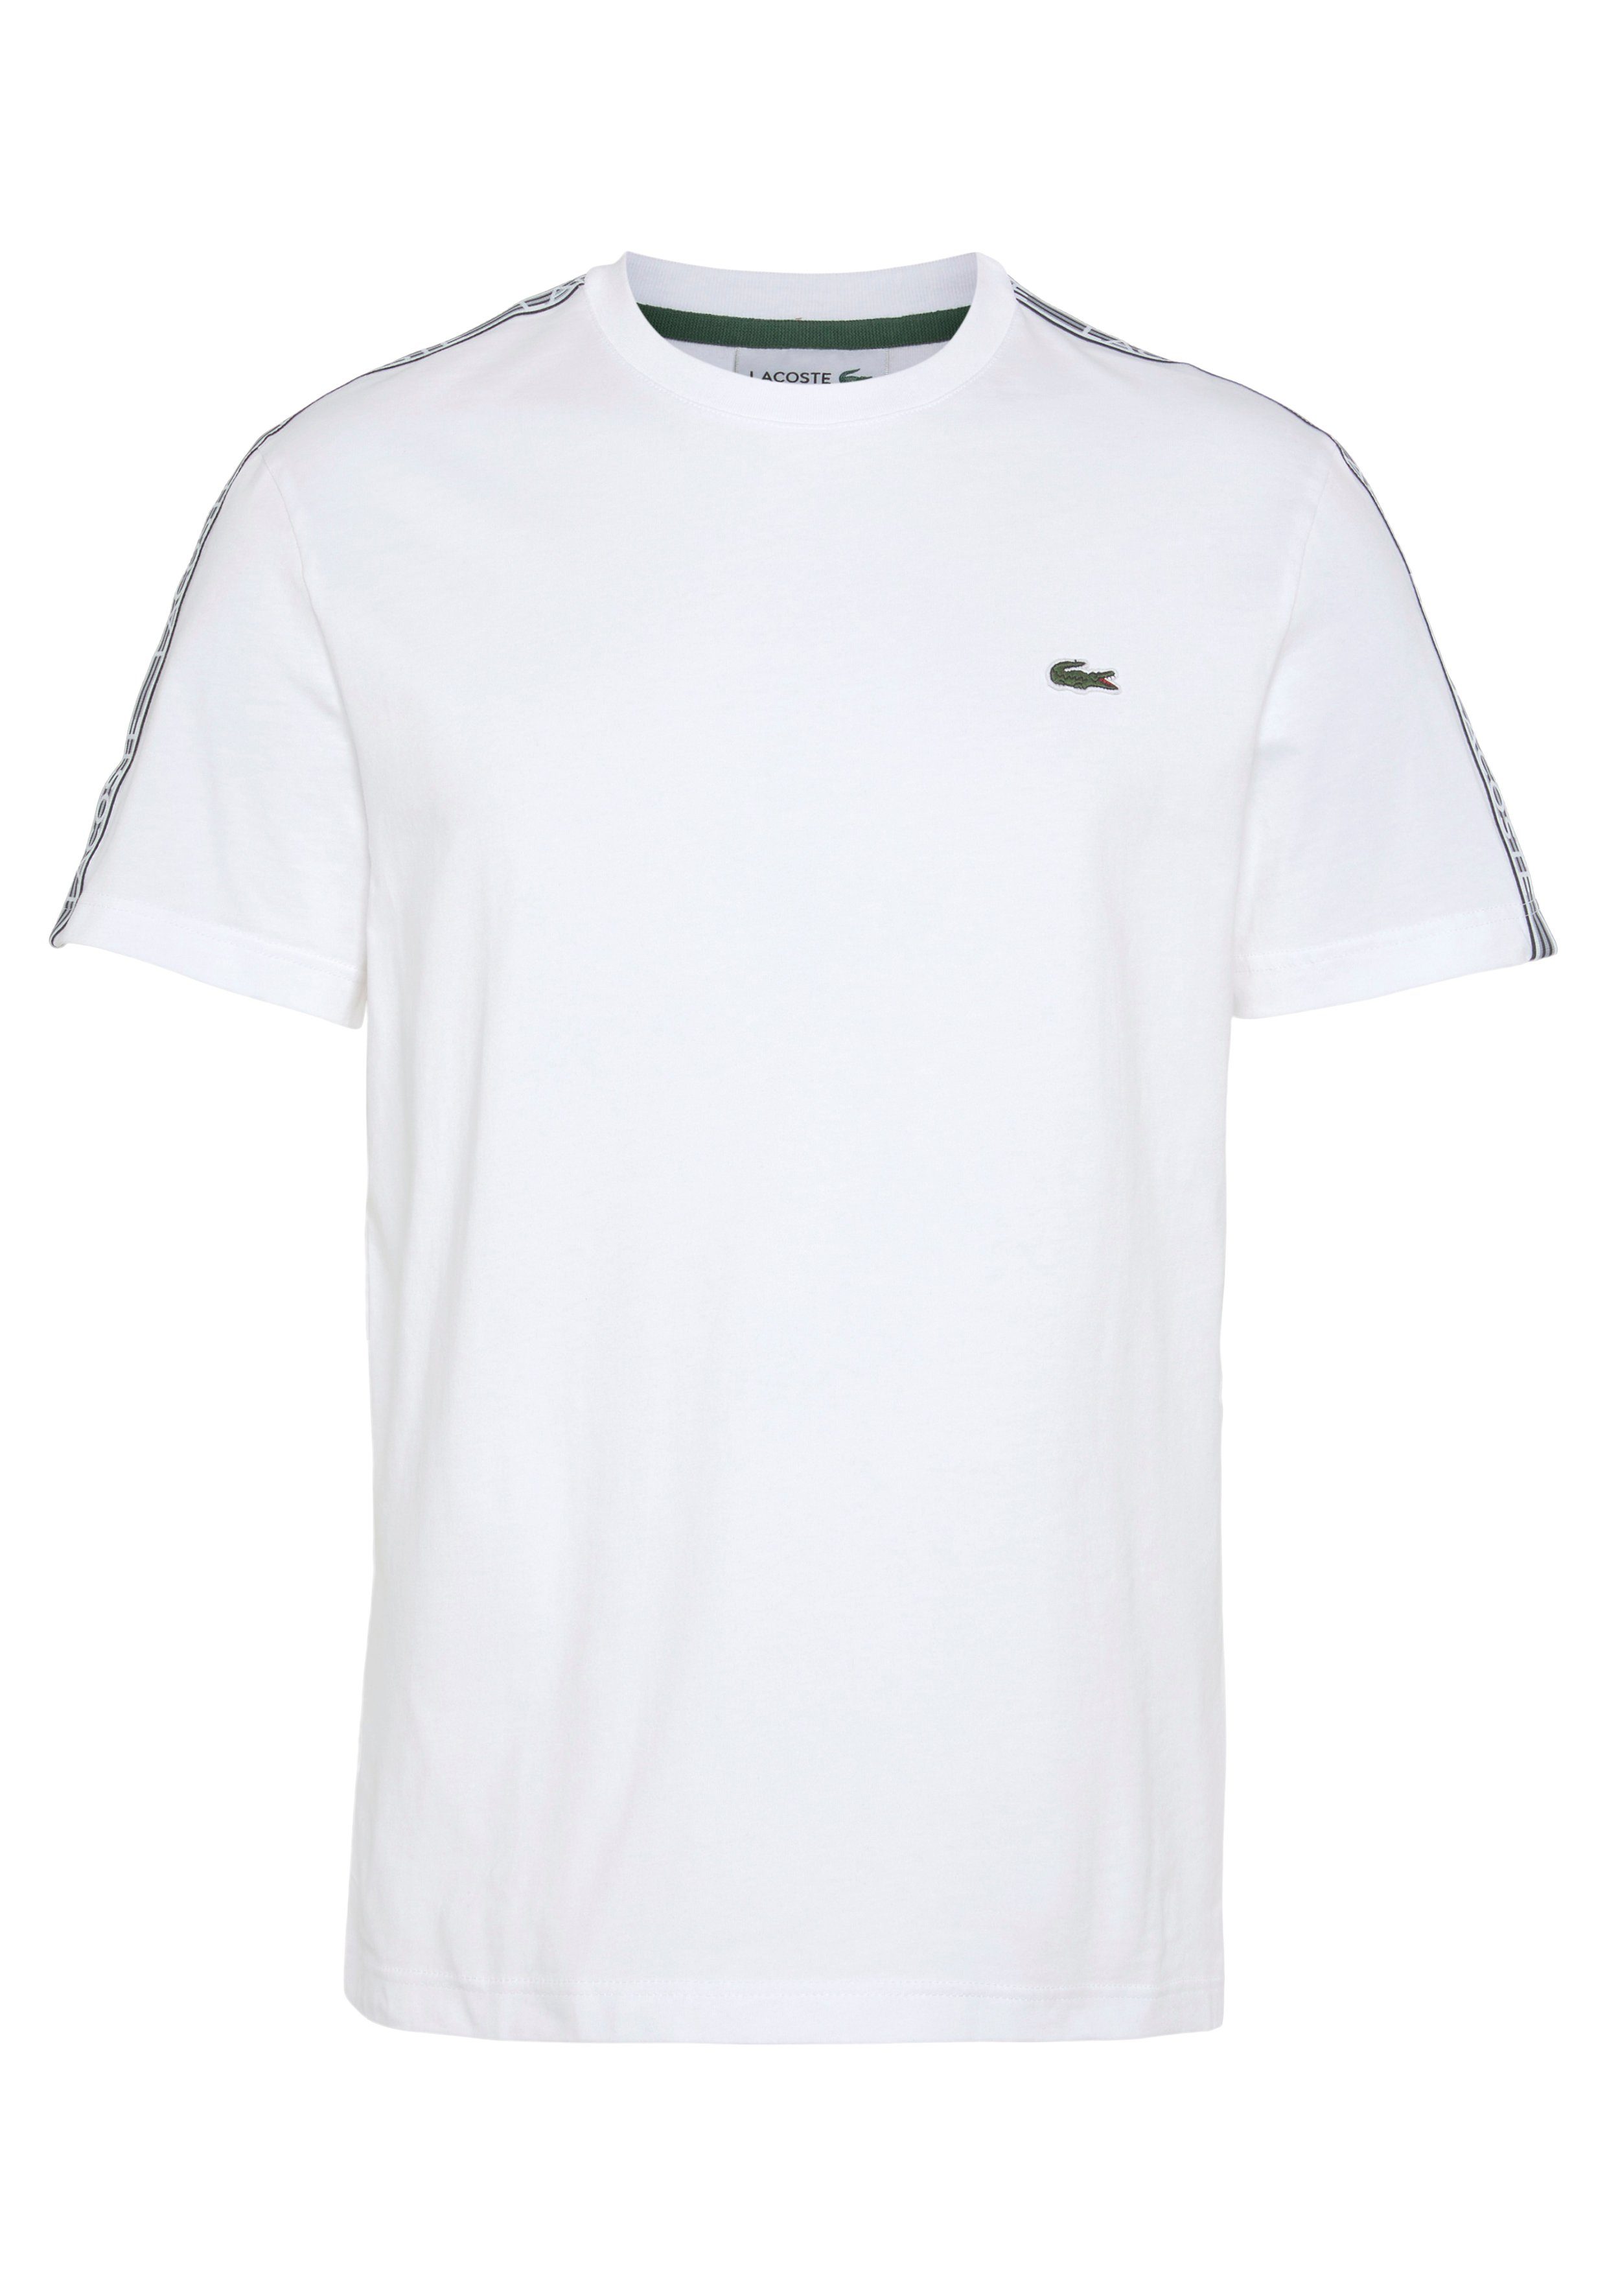 Schultern den T-Shirt Lacoste mit Kontrastband beschriftetem white an